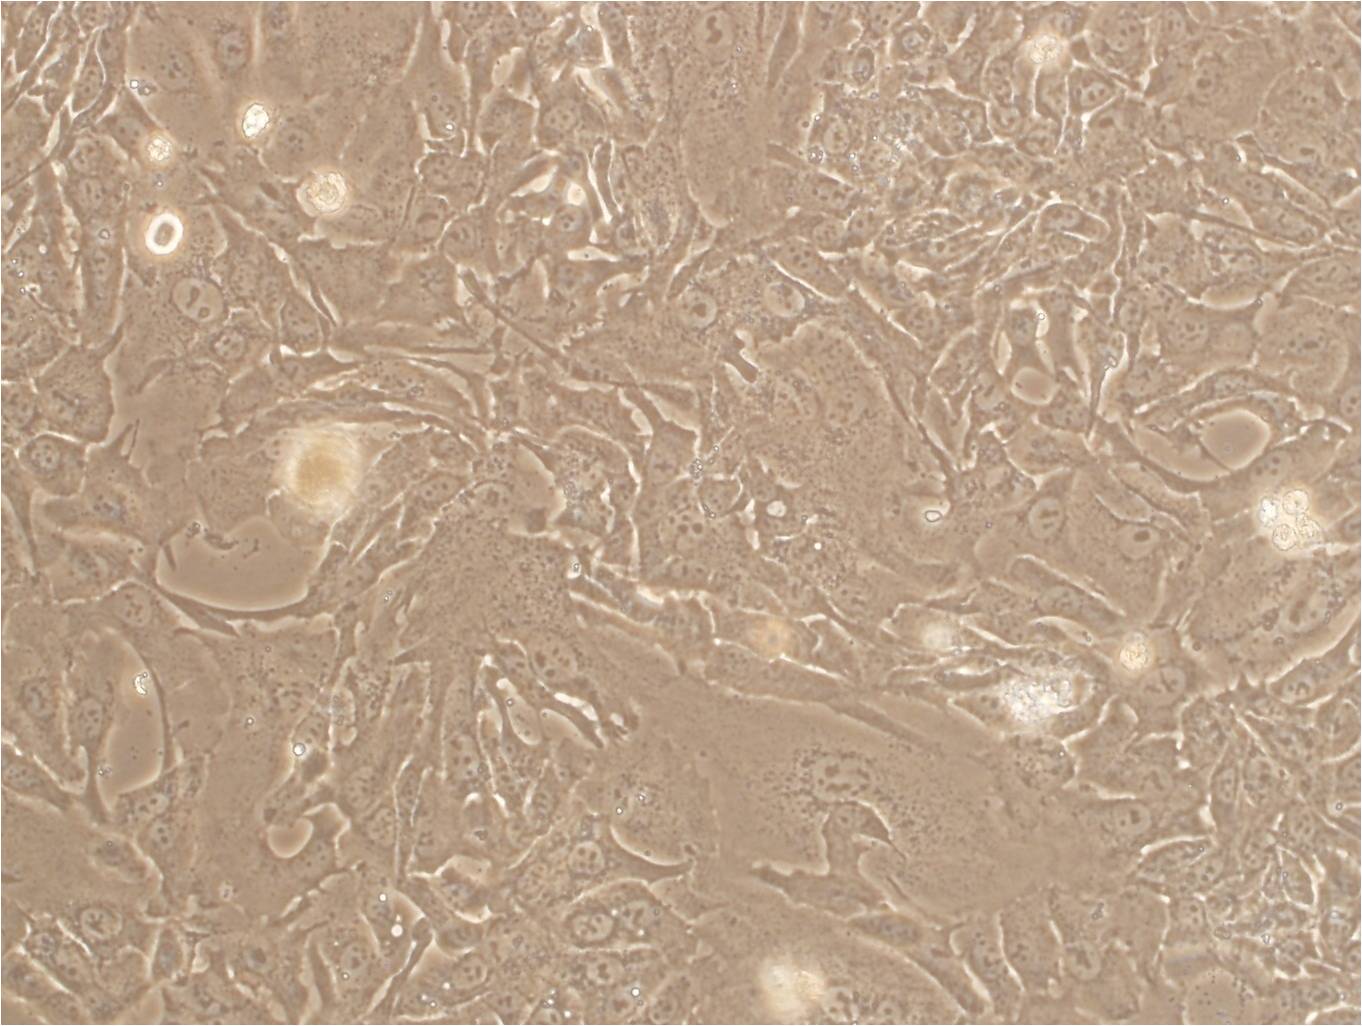 HCC1937 cell line人乳腺癌细胞系